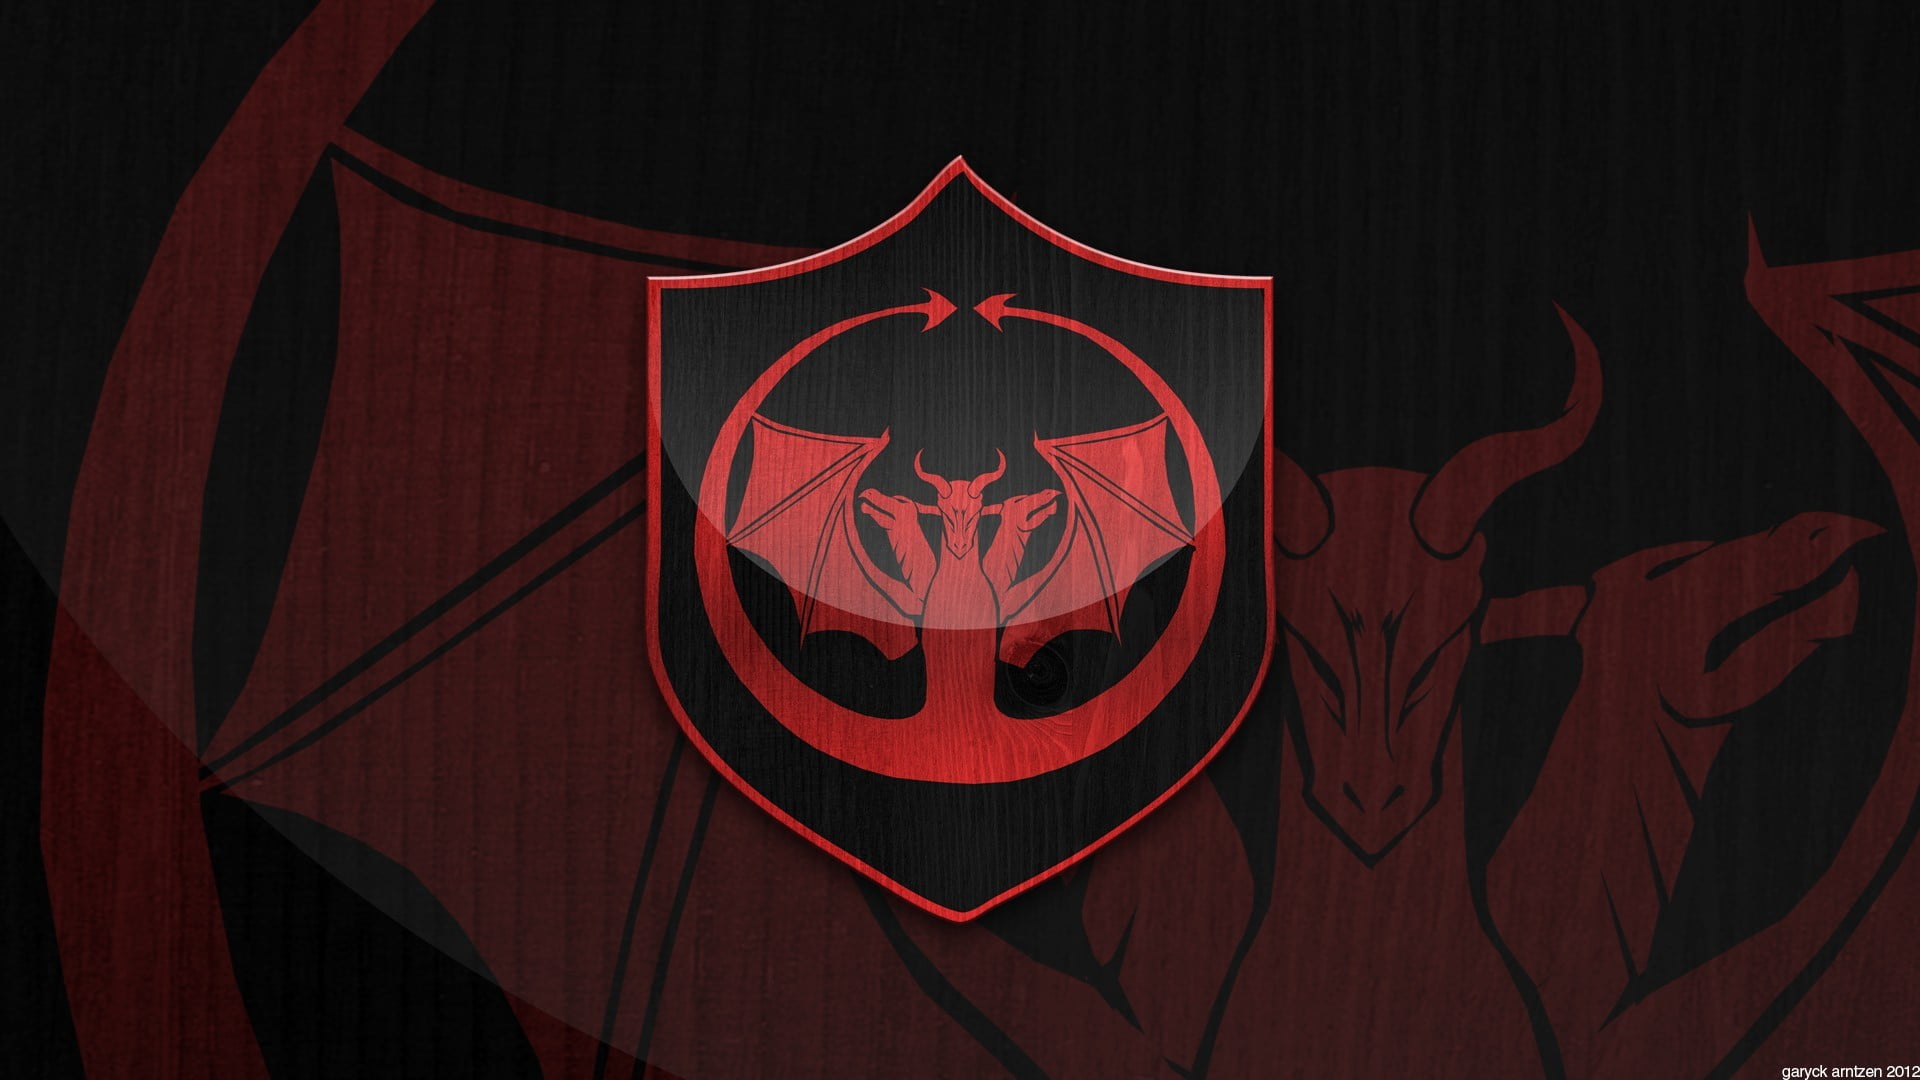 Red dragon logo Shields Game of Thrones HD wallpaper Wallpaper